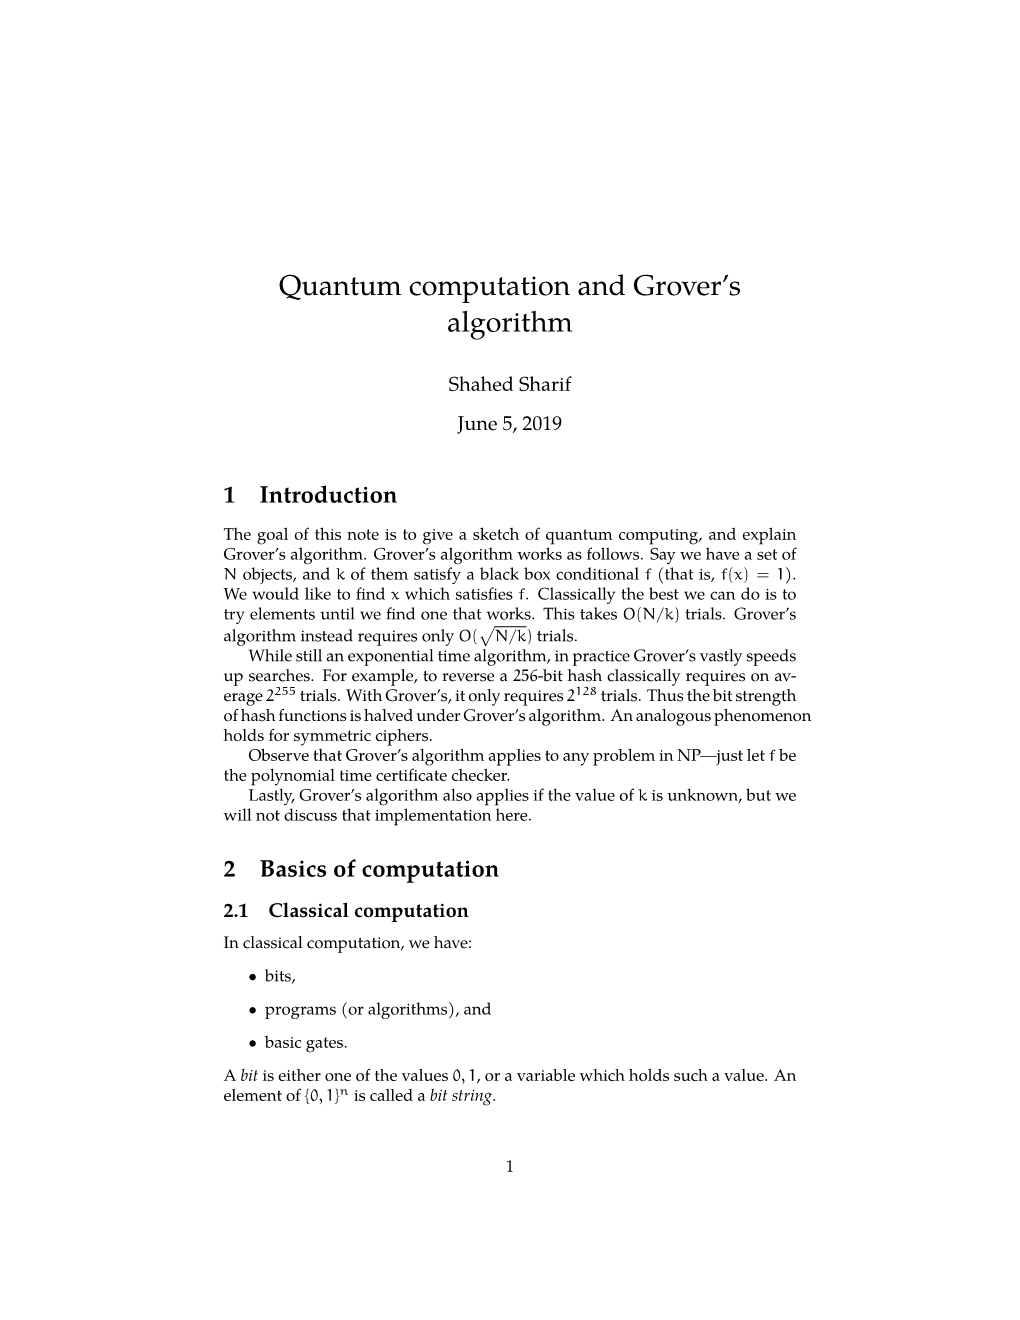 Quantum Computation and Grover's Algorithm